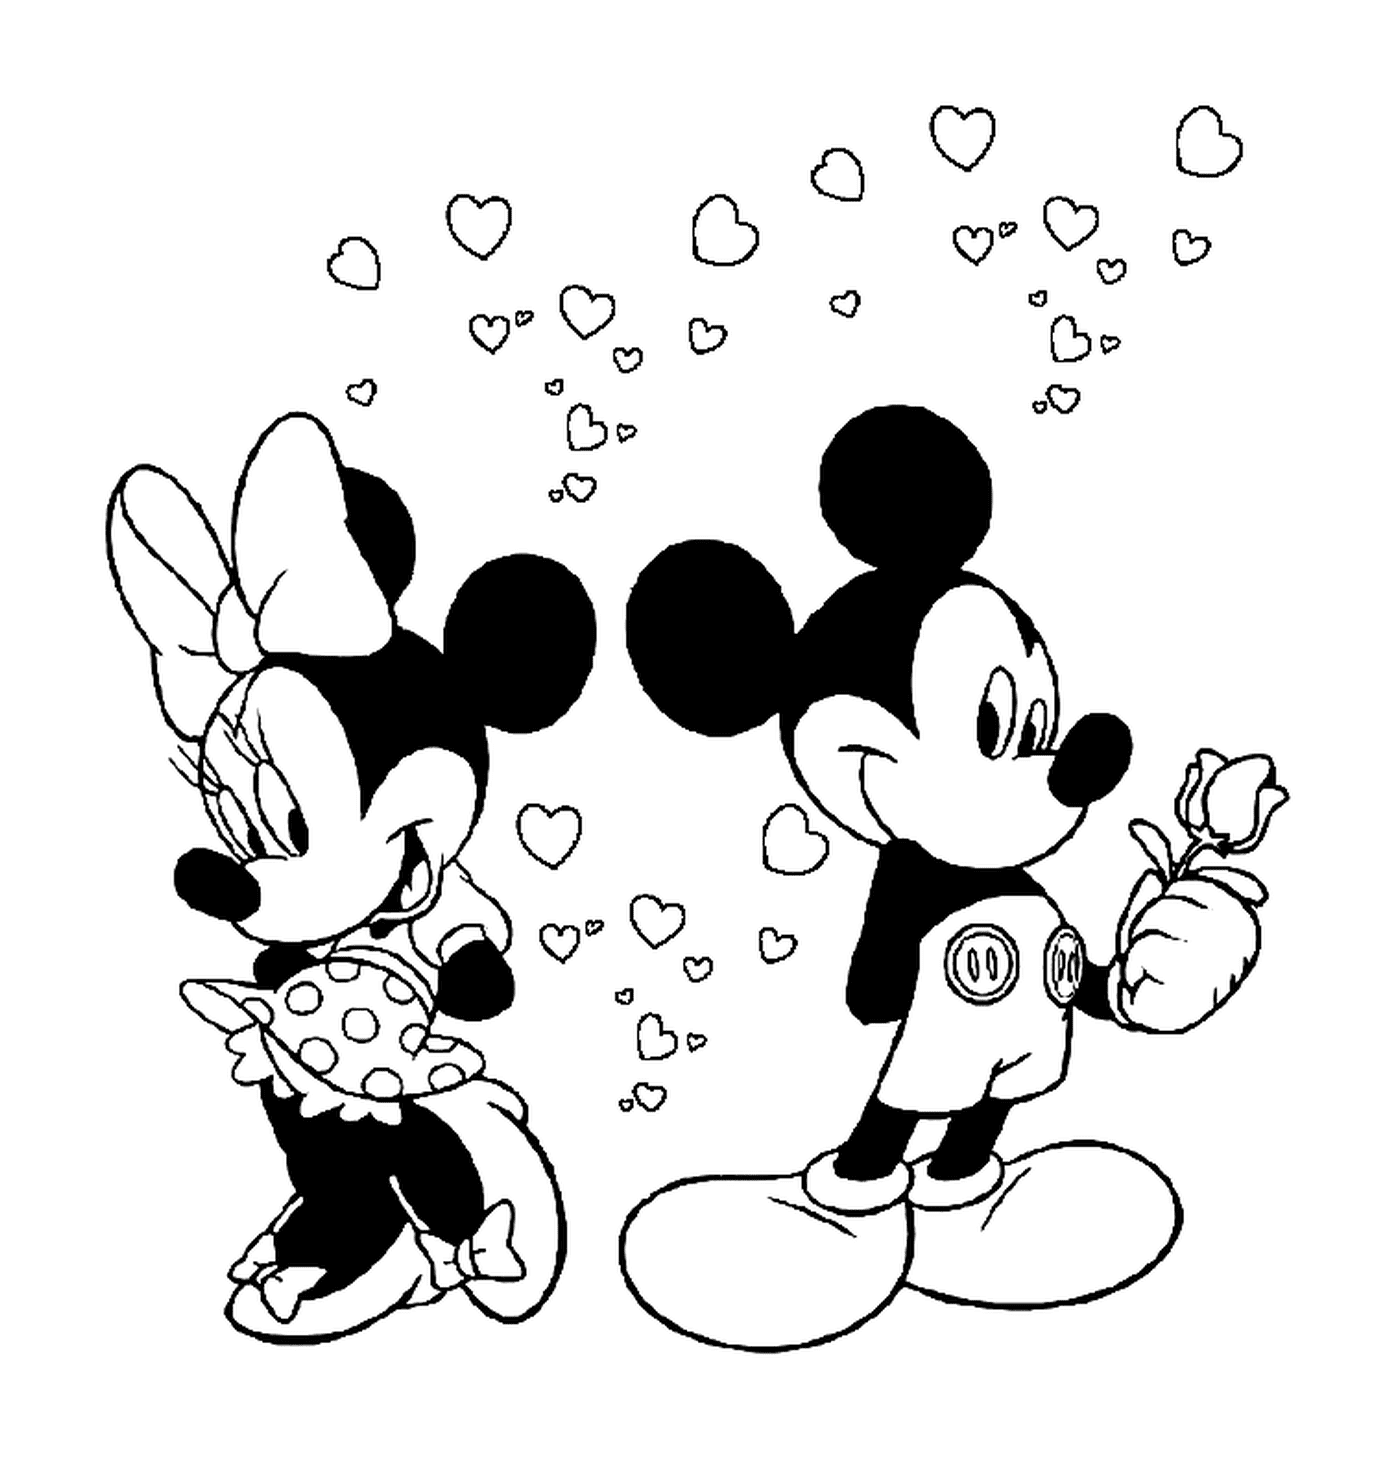  Mickey Mouse está enamorado de Minnie Mouse 